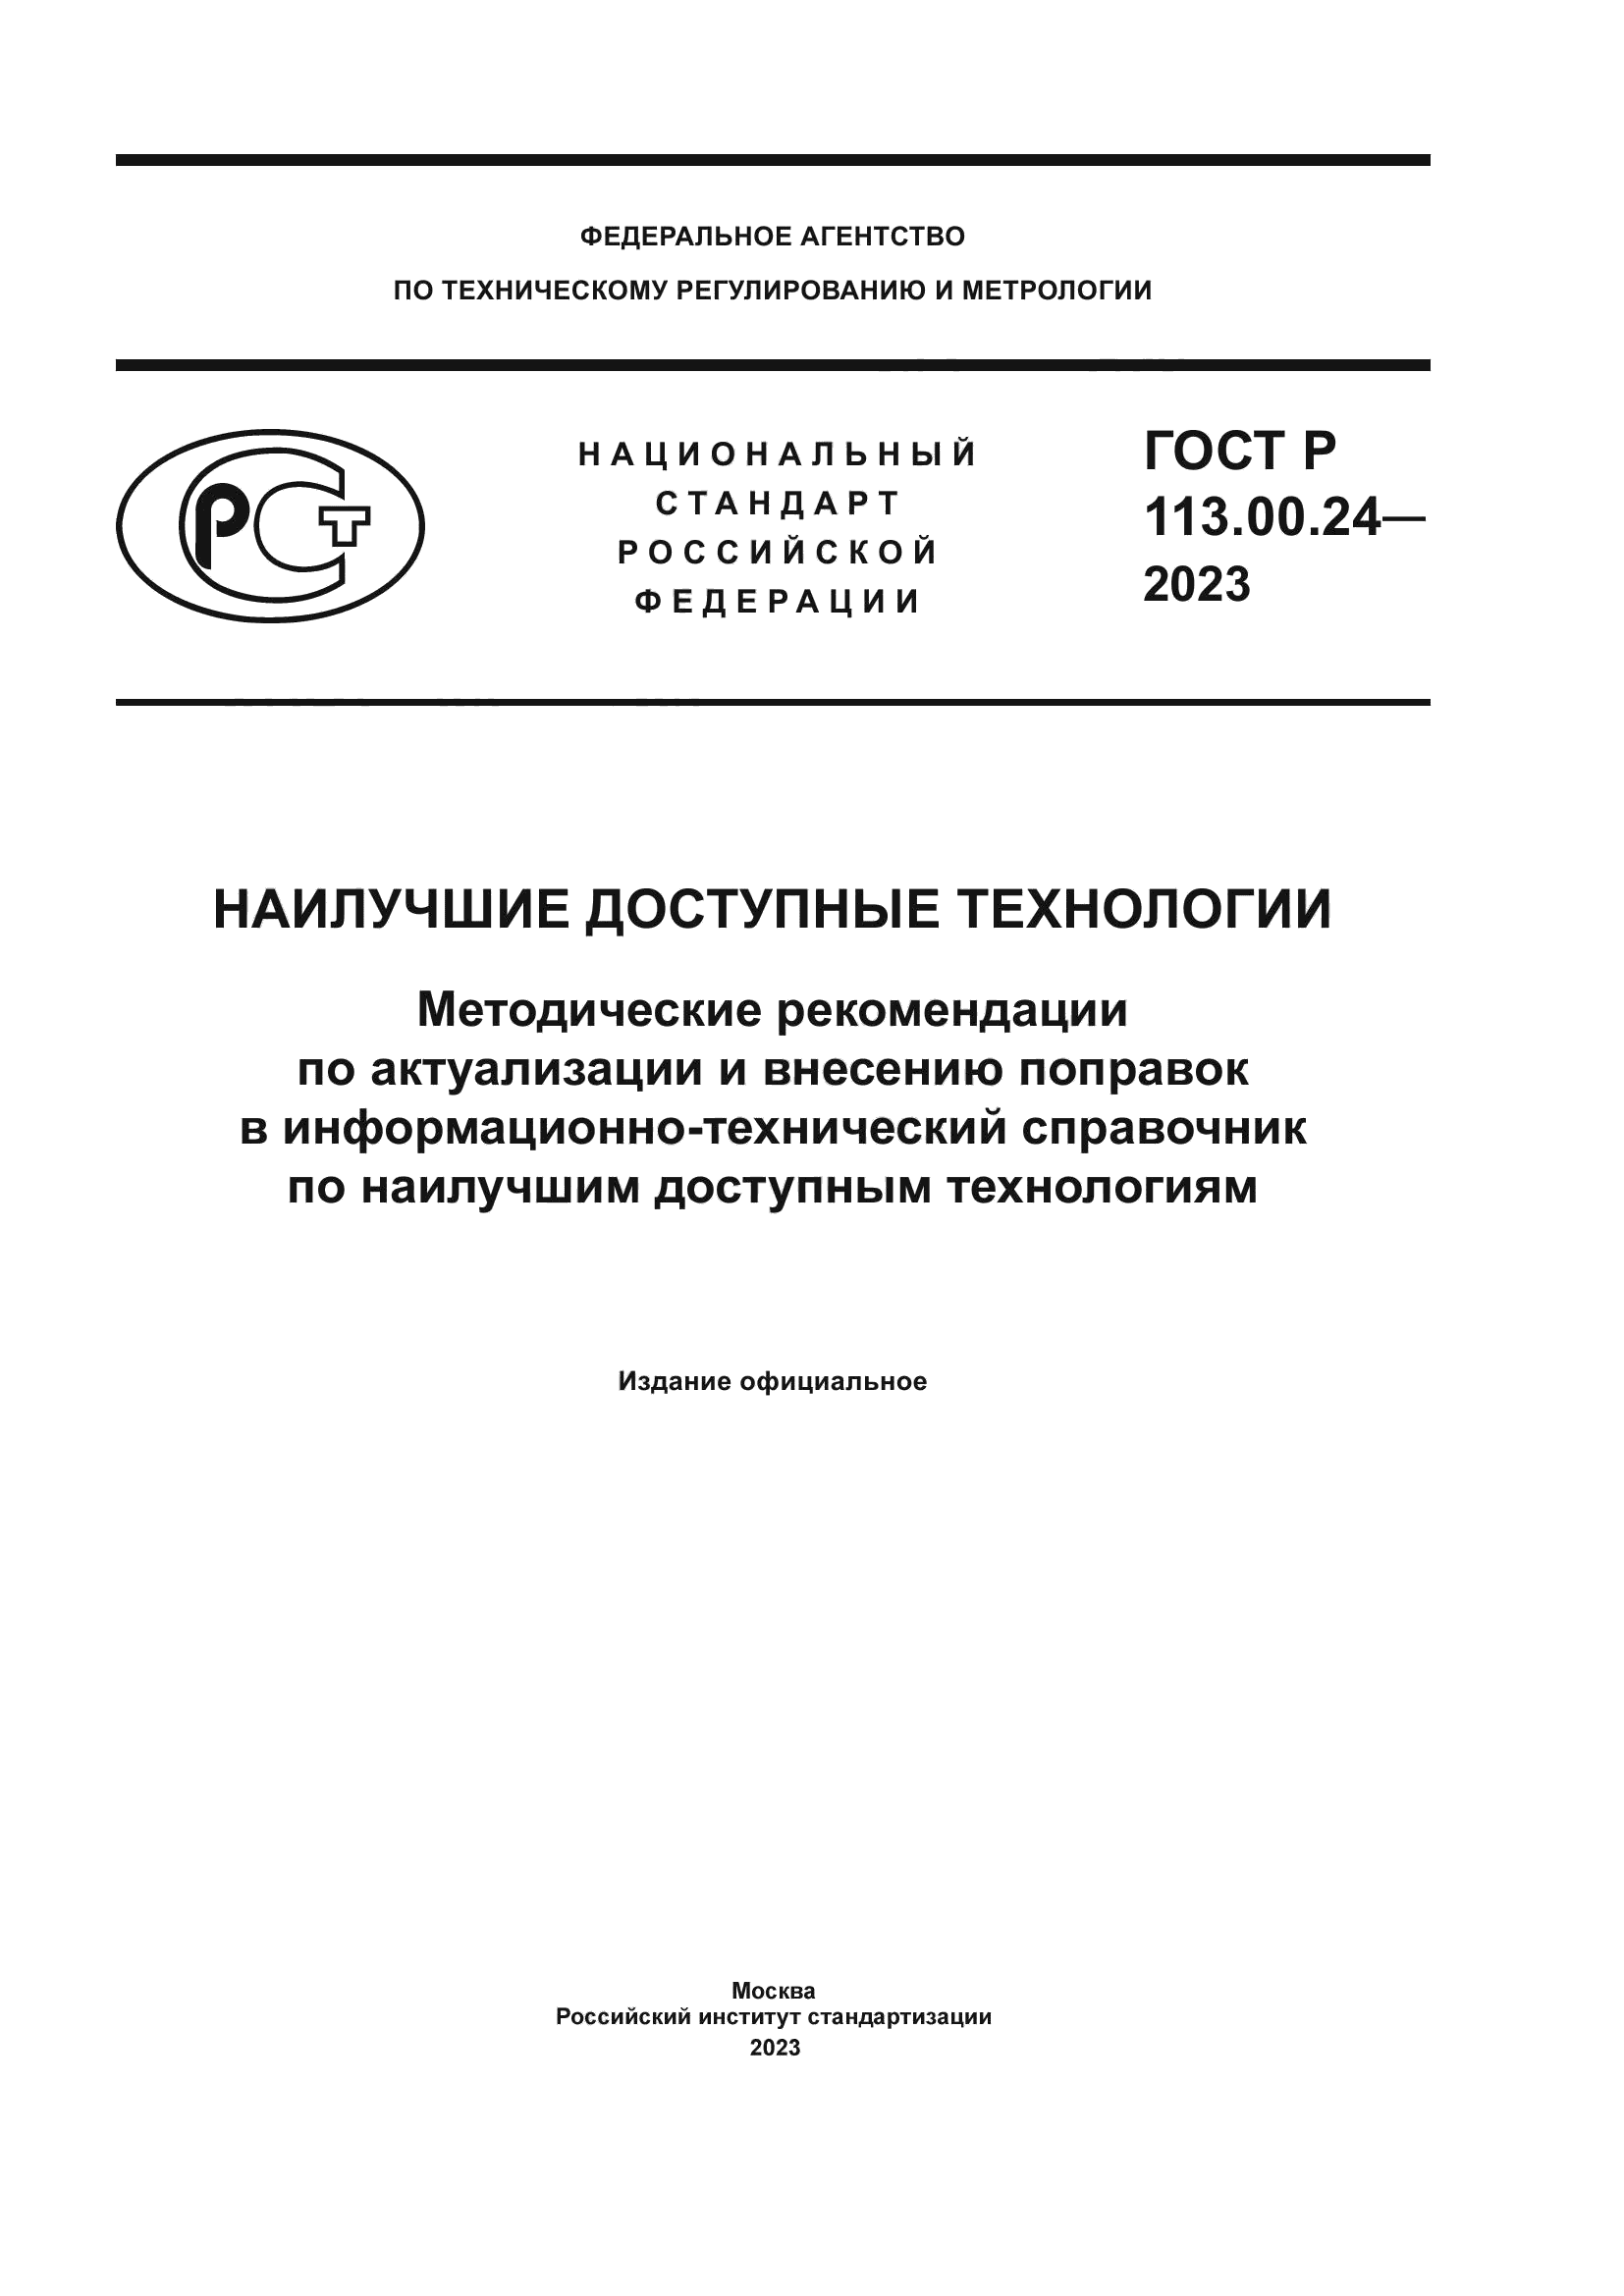 ГОСТ Р 113.00.24-2023